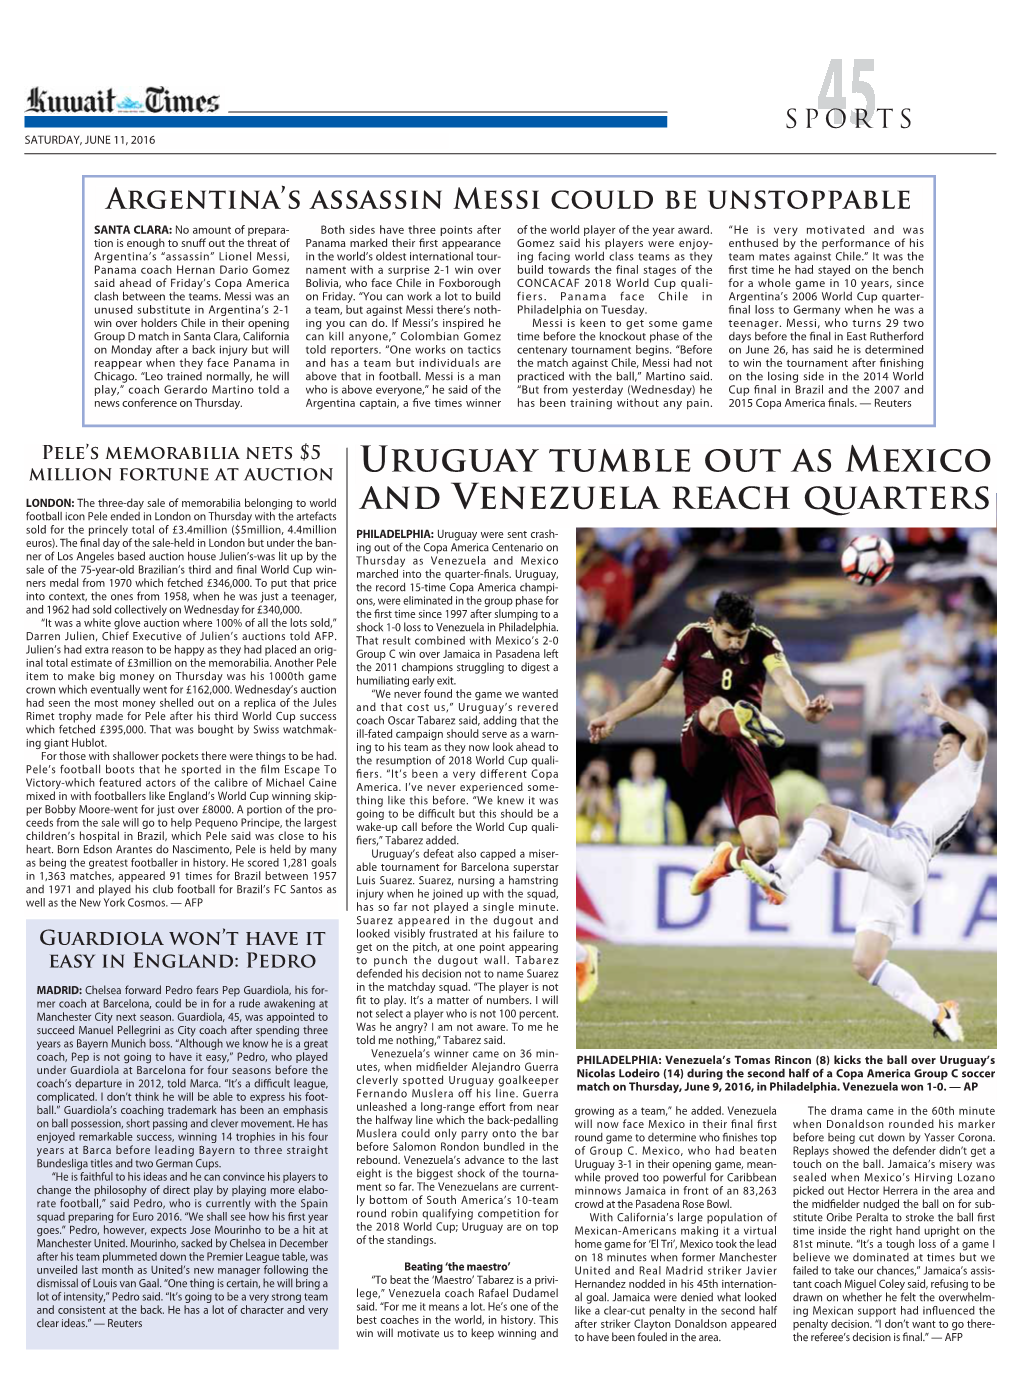 Uruguay Tumble out AS Mexico and Venezuela Reach Quarters